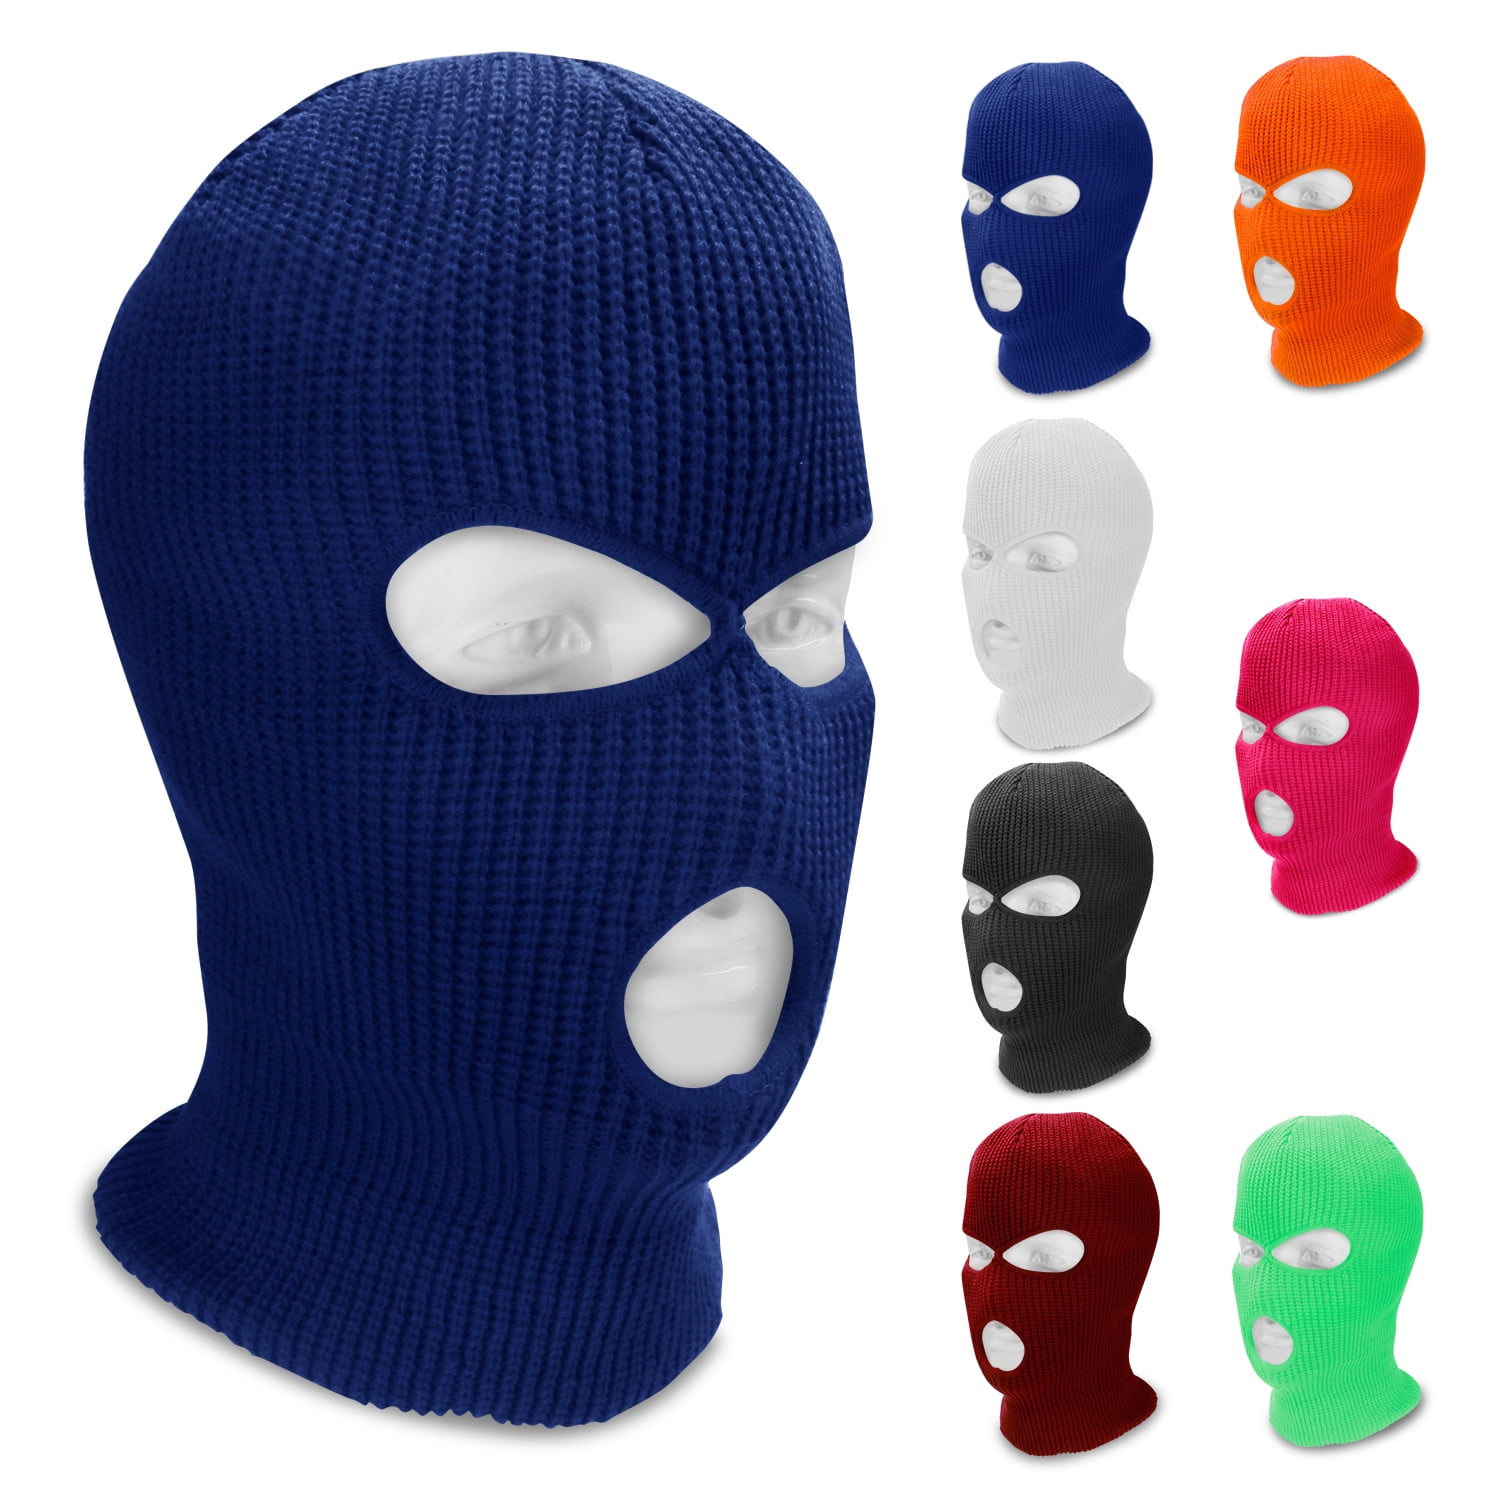 Knit Ski Mask Hat, Balaclava Full Face Ski Mask, Winter Sports Hat,  Outdoors Gift, Christmas Gift, Strange and Unique Ski Mask Mens Winter 